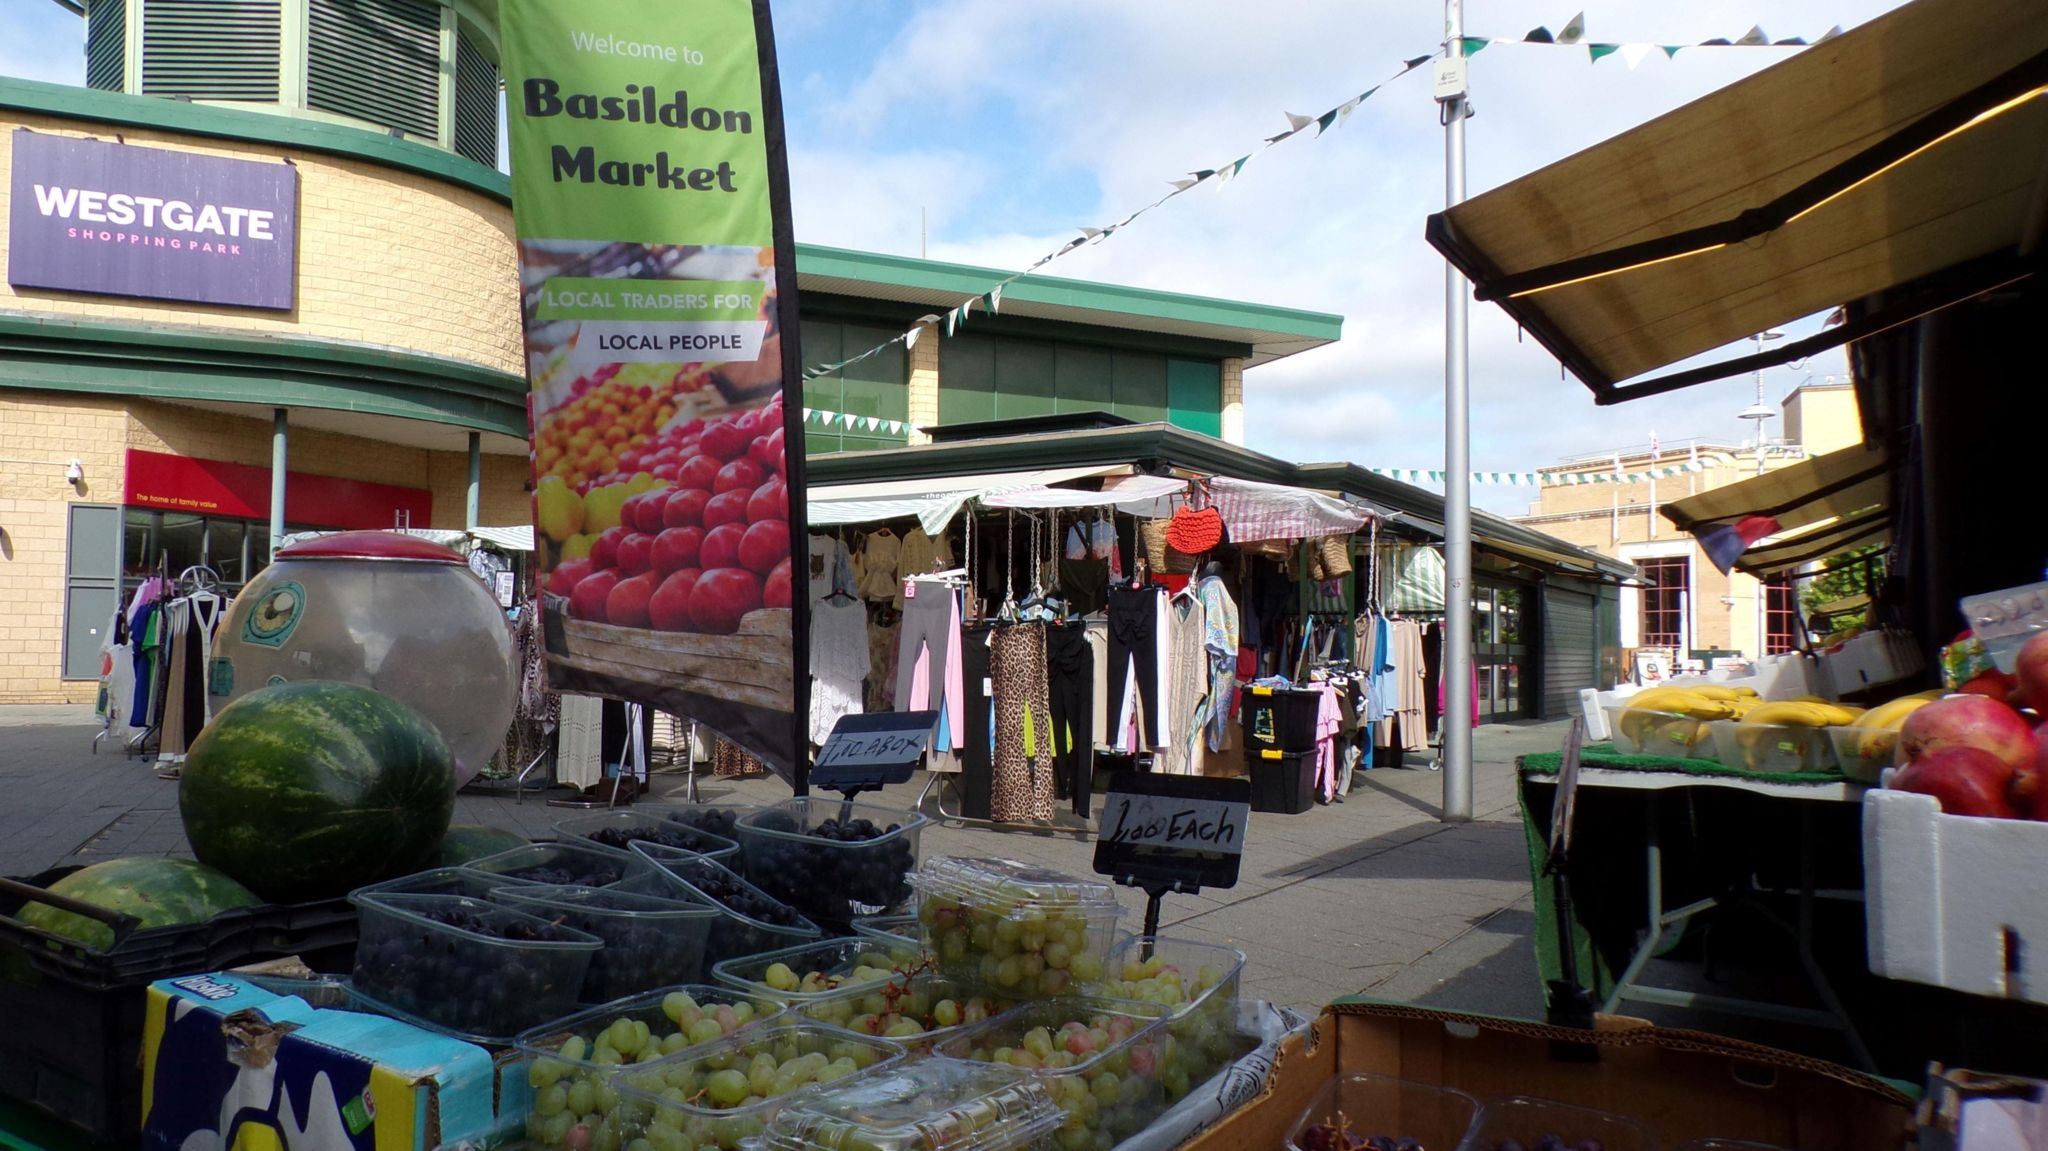 A view of stalls at Basildon Market